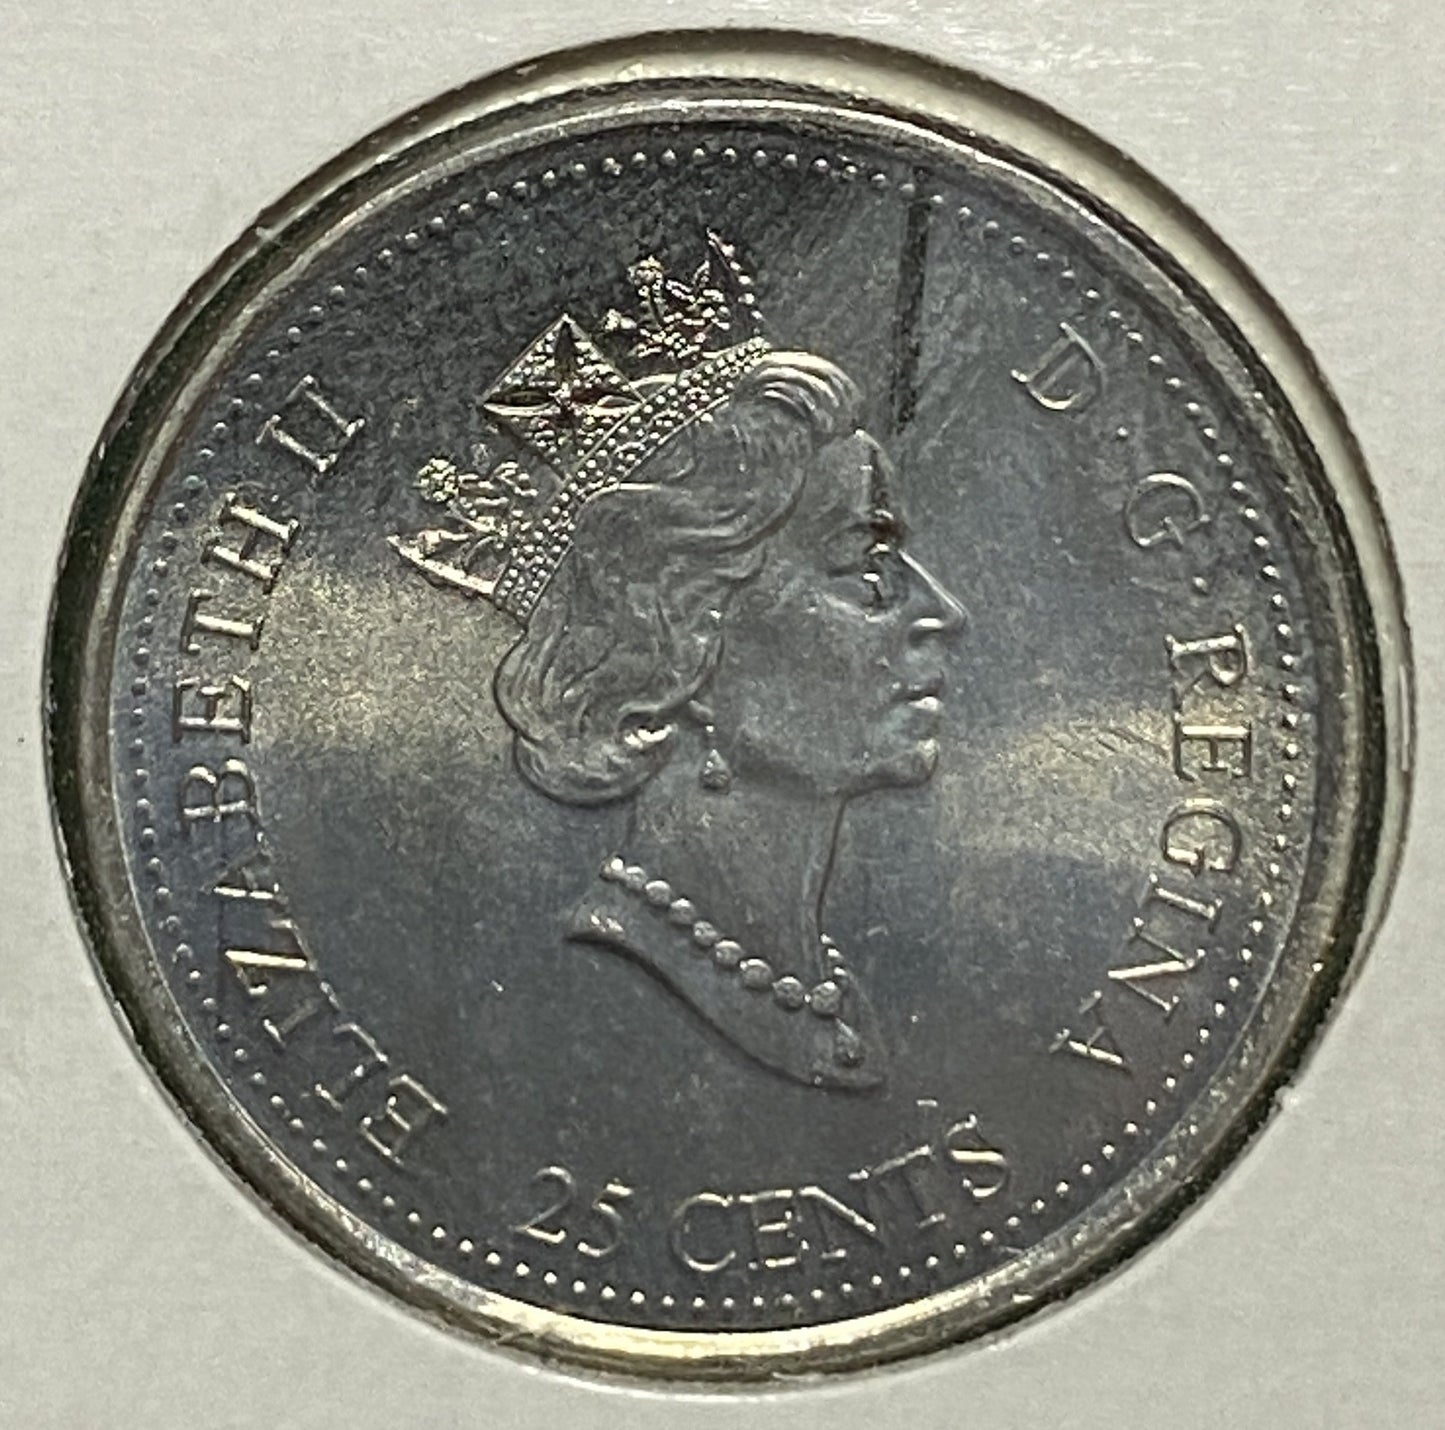 CANADIAN 2000 MILLENNIUM FEBRUARY INGENUITY Queen Elizabeth II  25 CENTS QUARTER COIN AU / UNC CONDITION